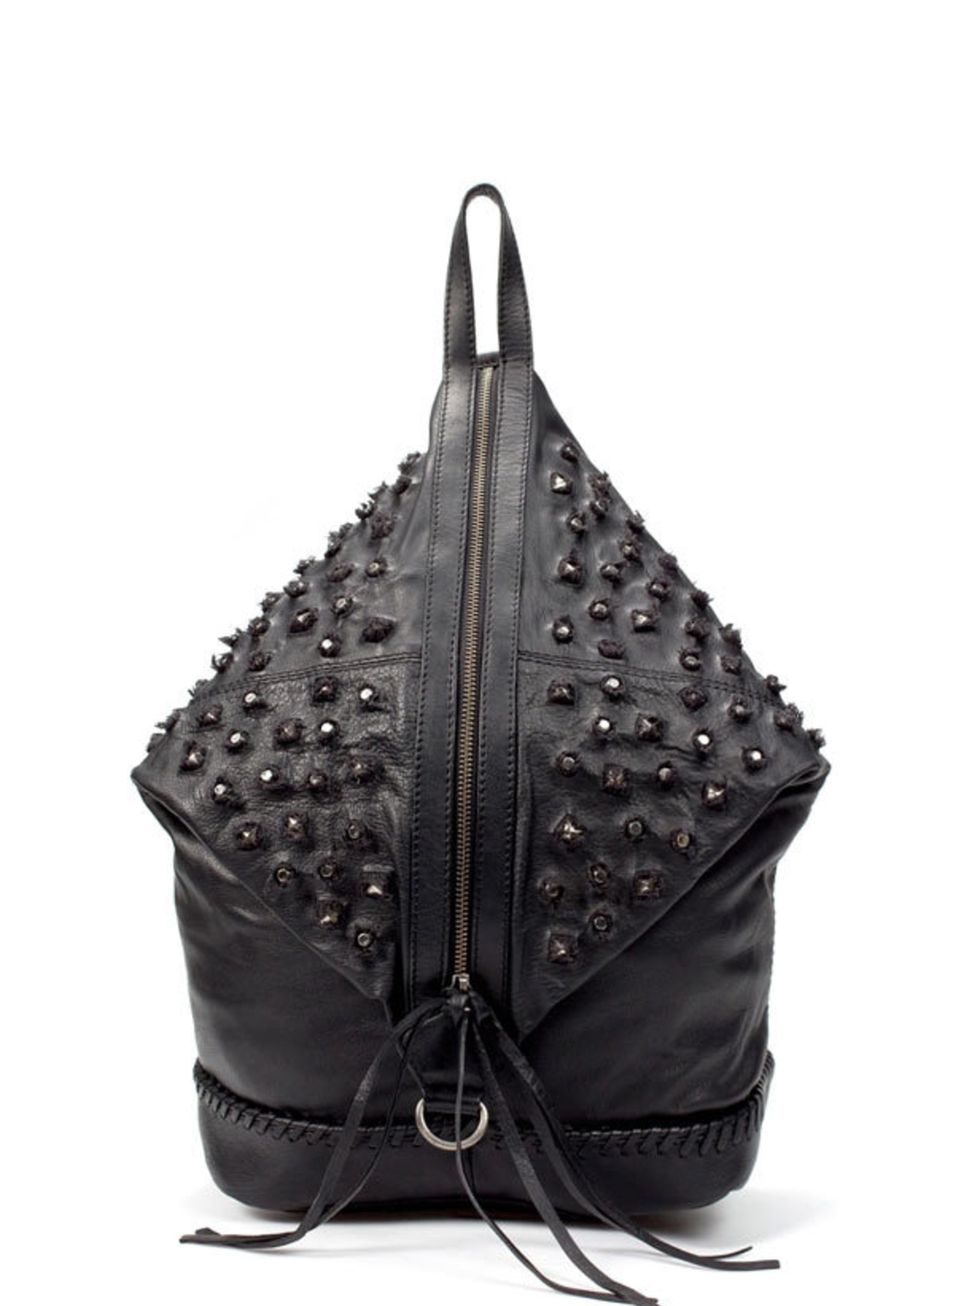 <p><a href="http://www.zara.com/webapp/wcs/stores/servlet/product/uk/en/zara-S2011/61145/313533/HANDBAG%2BWITH%2BCOVERED%2BSTUDS">Zara</a> studded leather bag, £109</p>